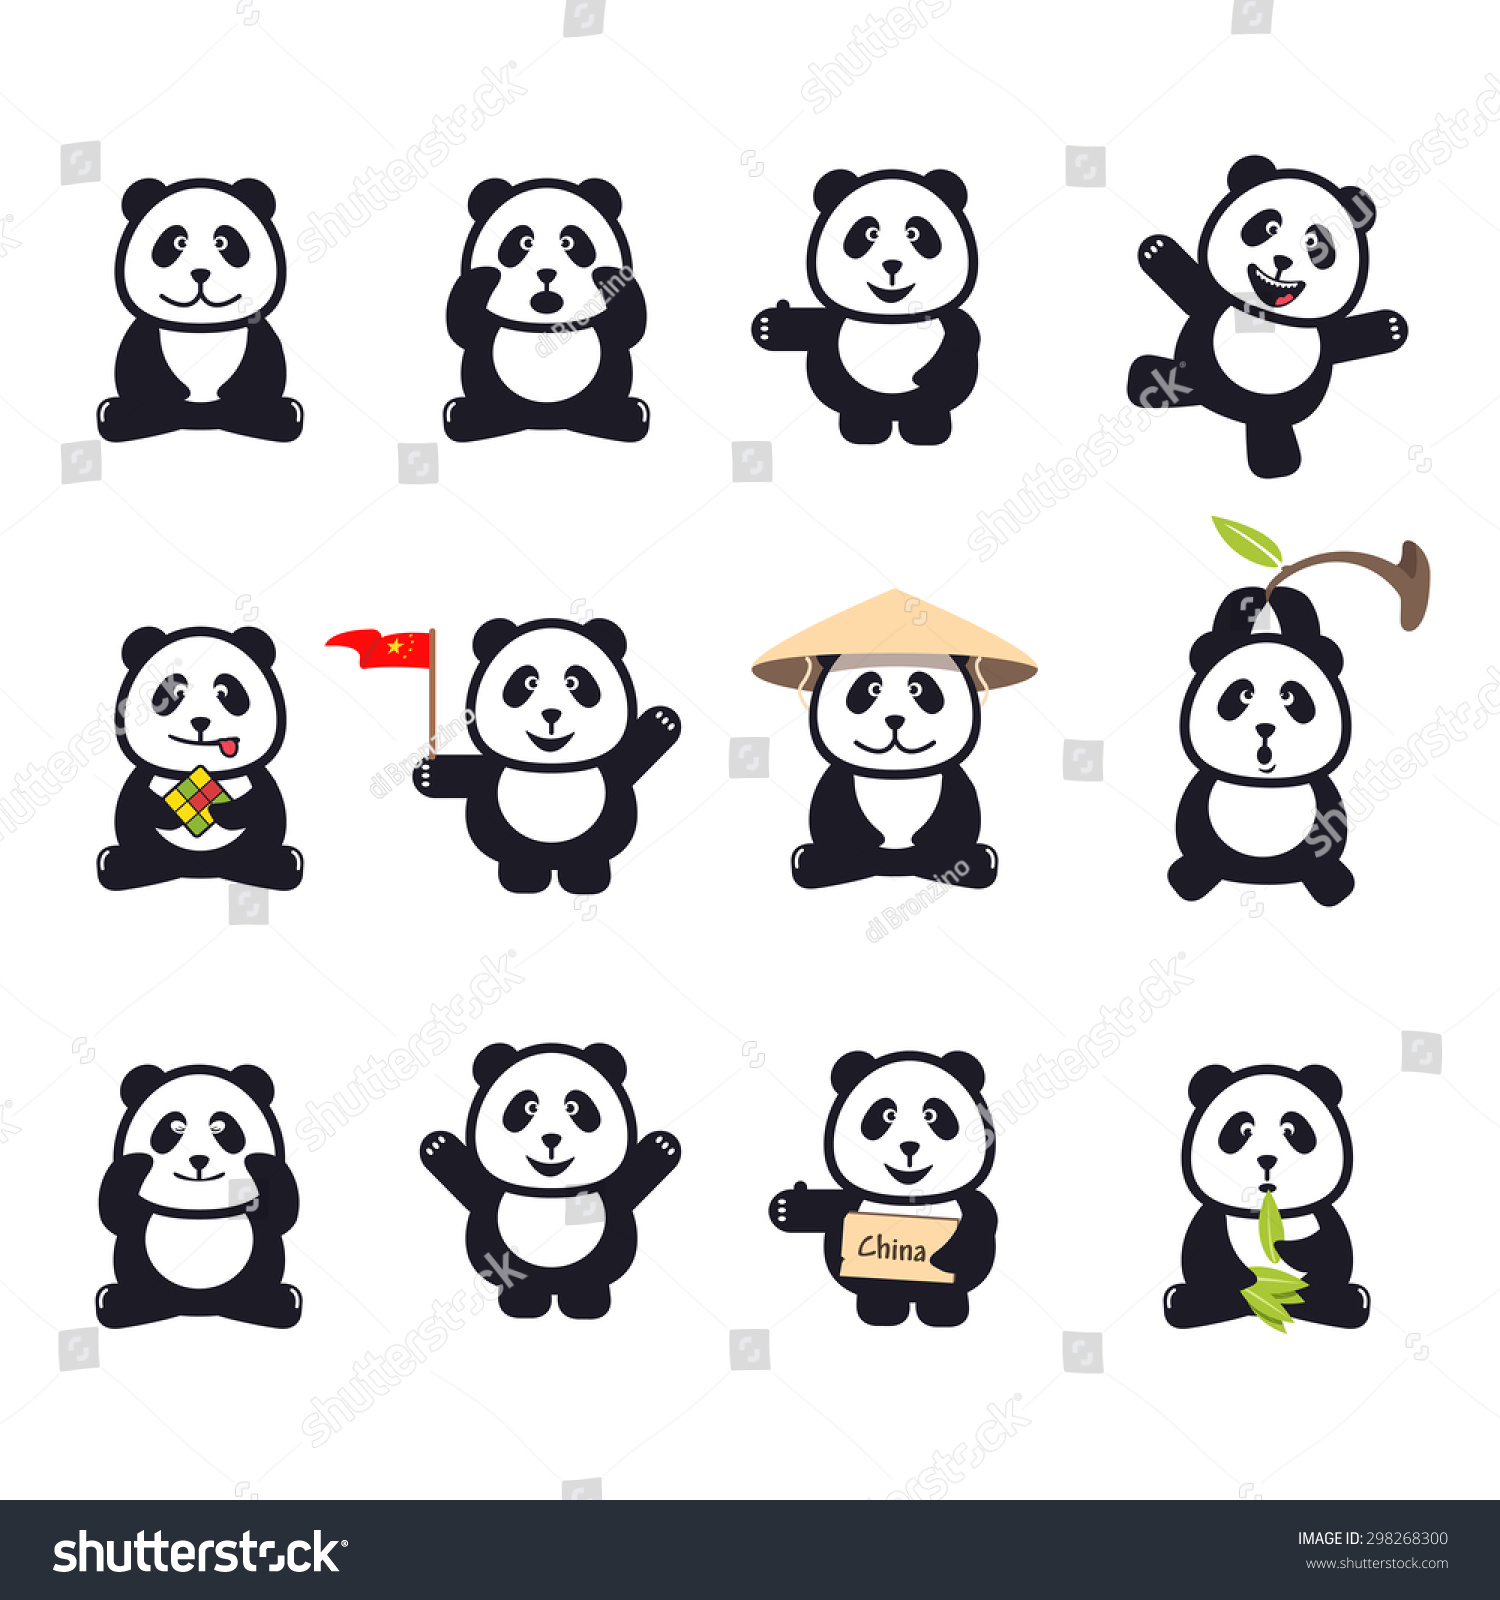 SVG of set of cute funny cartoon pandas svg